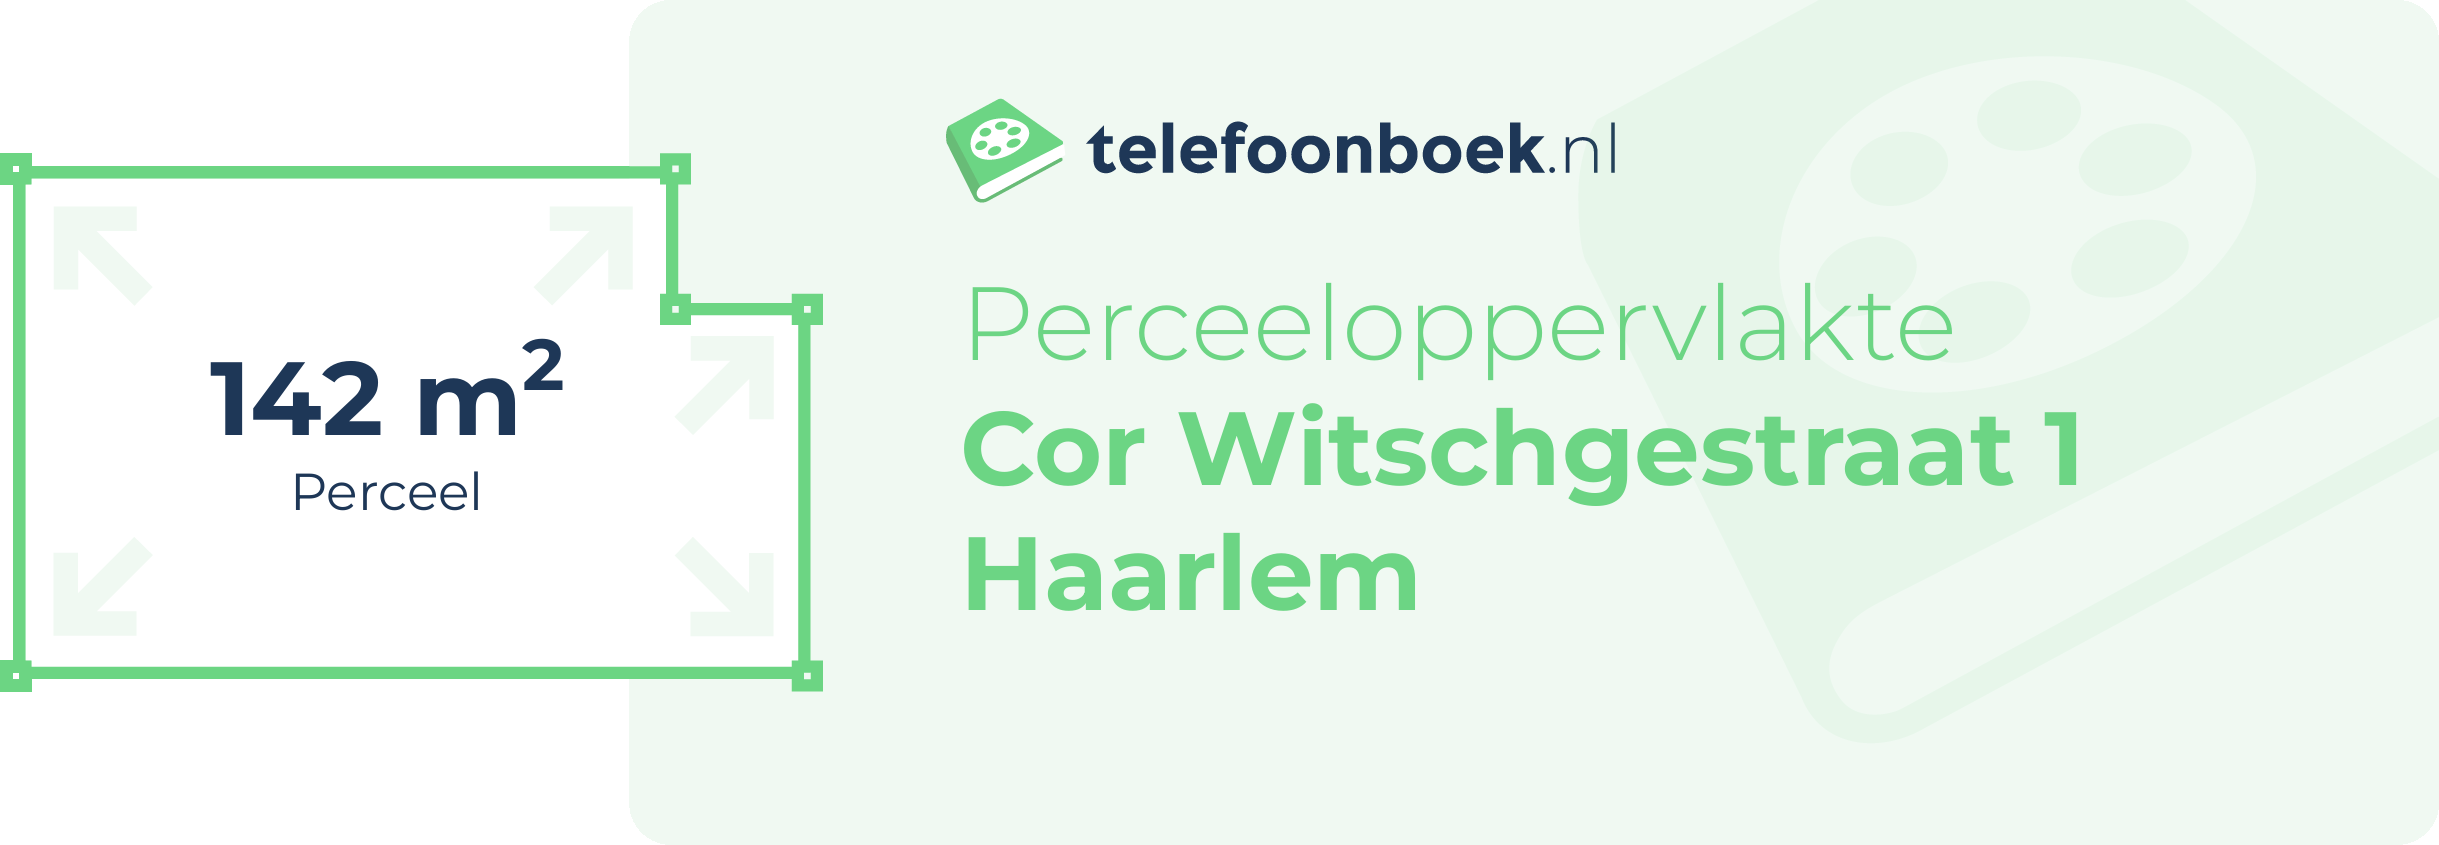 Perceeloppervlakte Cor Witschgestraat 1 Haarlem